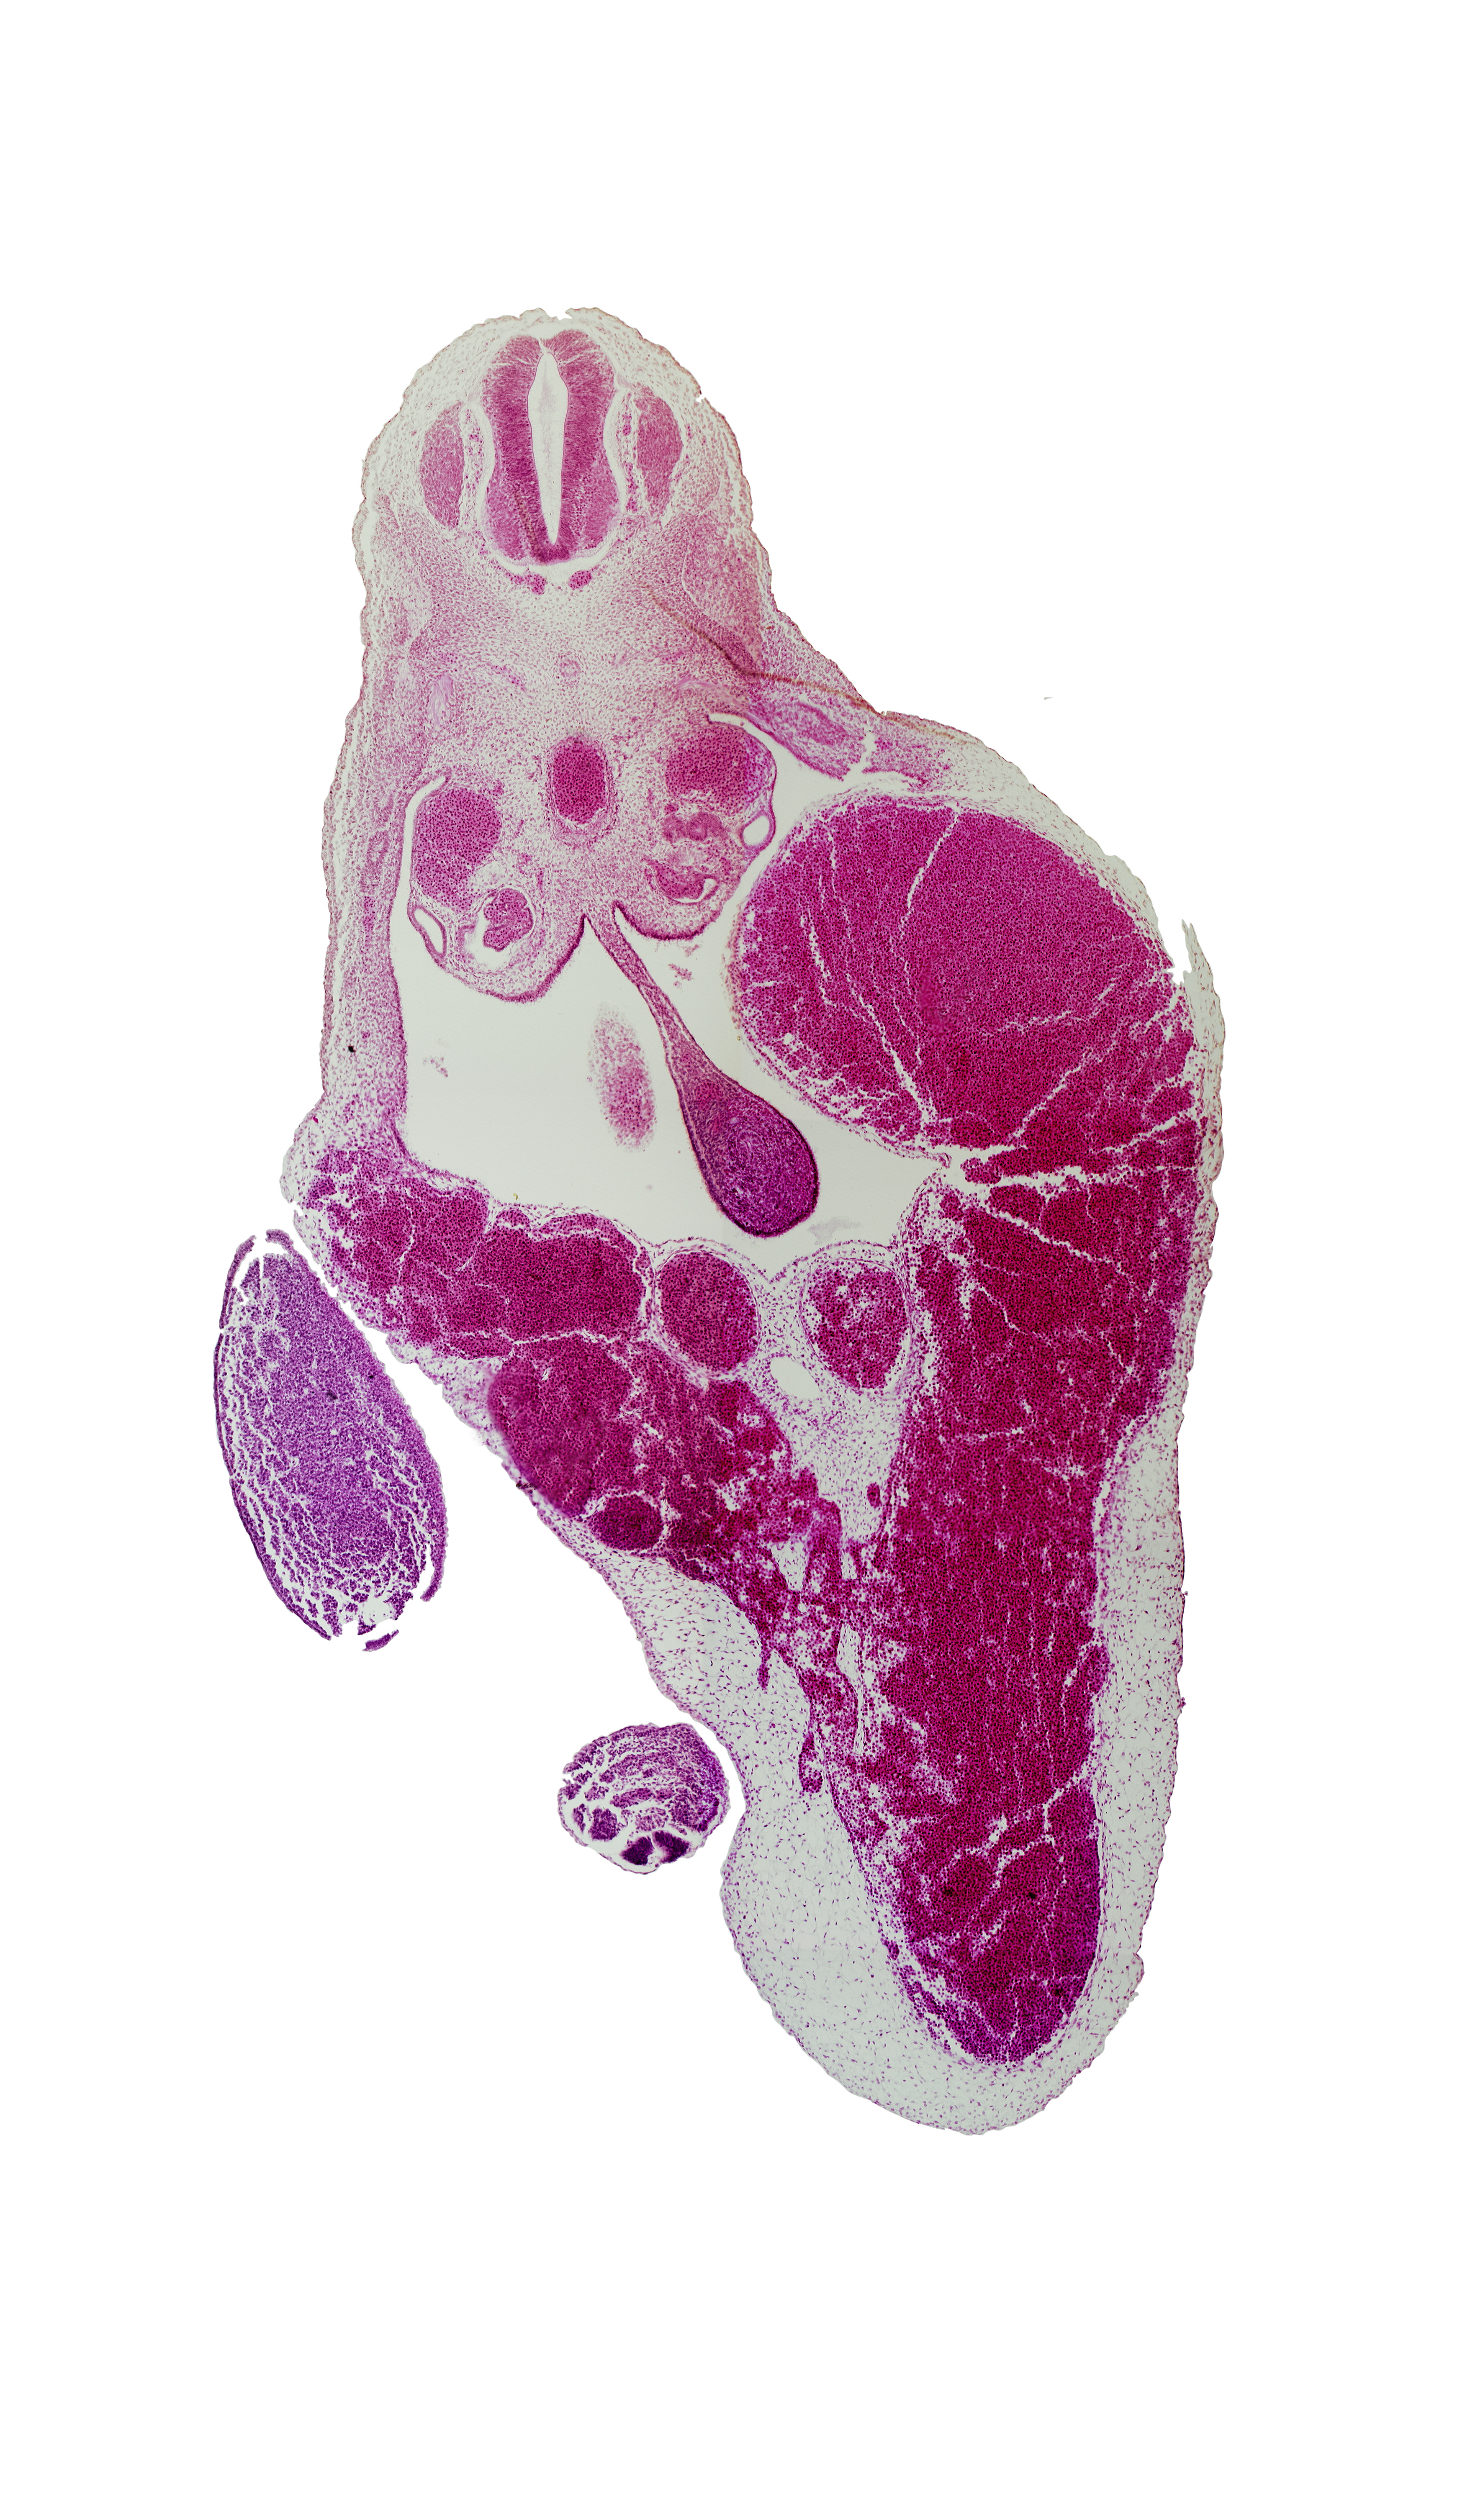 T-9 spinal ganglion, allantois, aorta, caudal edge of superior mesenteric artery, caudal eminence, dorsal mesentery, gonadal ridge, junction of definitive umbilical vein and right umbilical vein, lower limb (distal part), mesonephric duct, midgut, umbilical cord